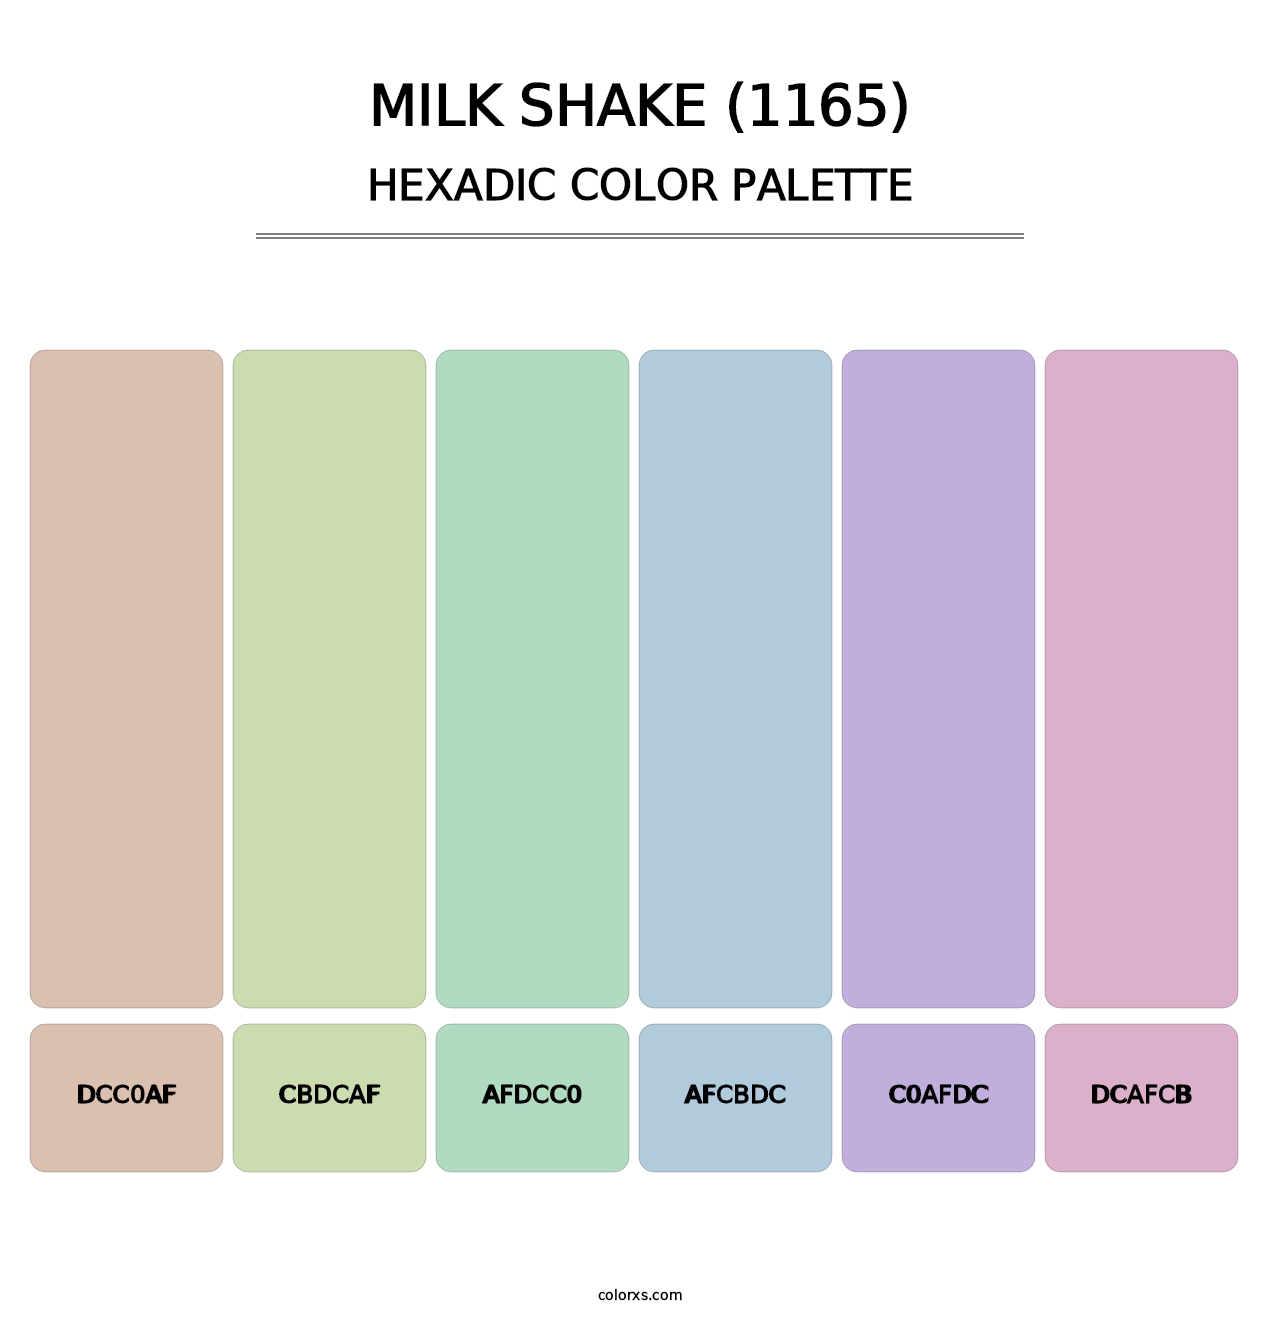 Milk Shake (1165) - Hexadic Color Palette